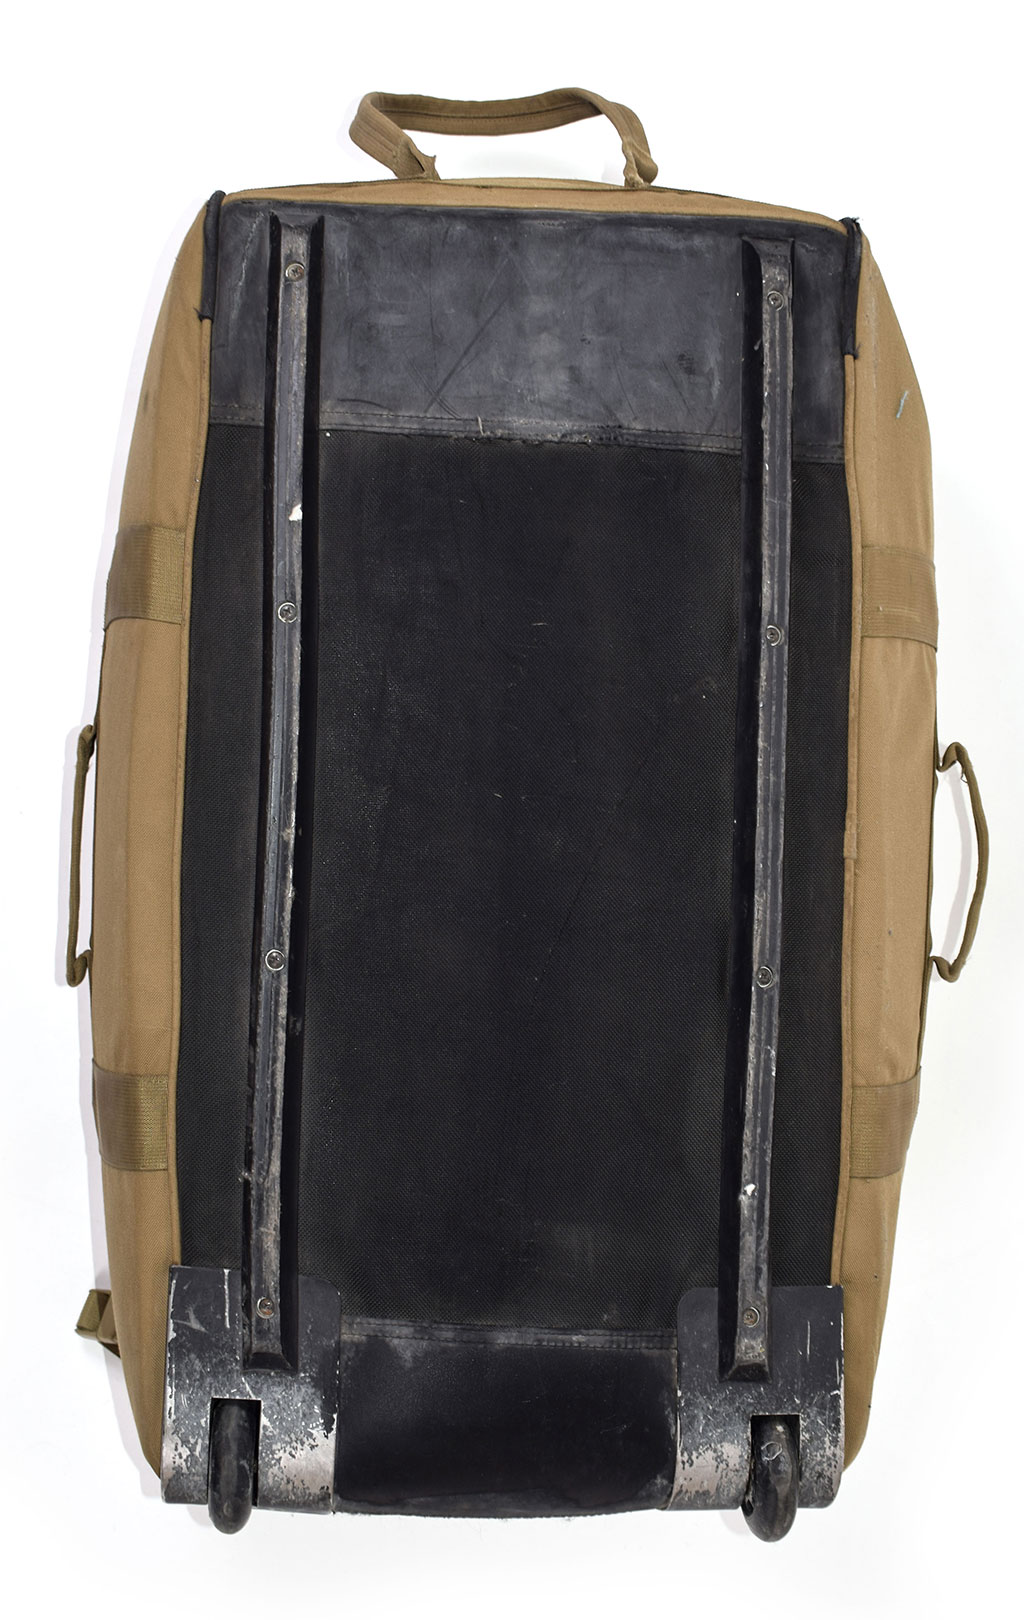 Сумка вещевая-рюкзак на колёсах USMC 70x35x30 coyote б/у США